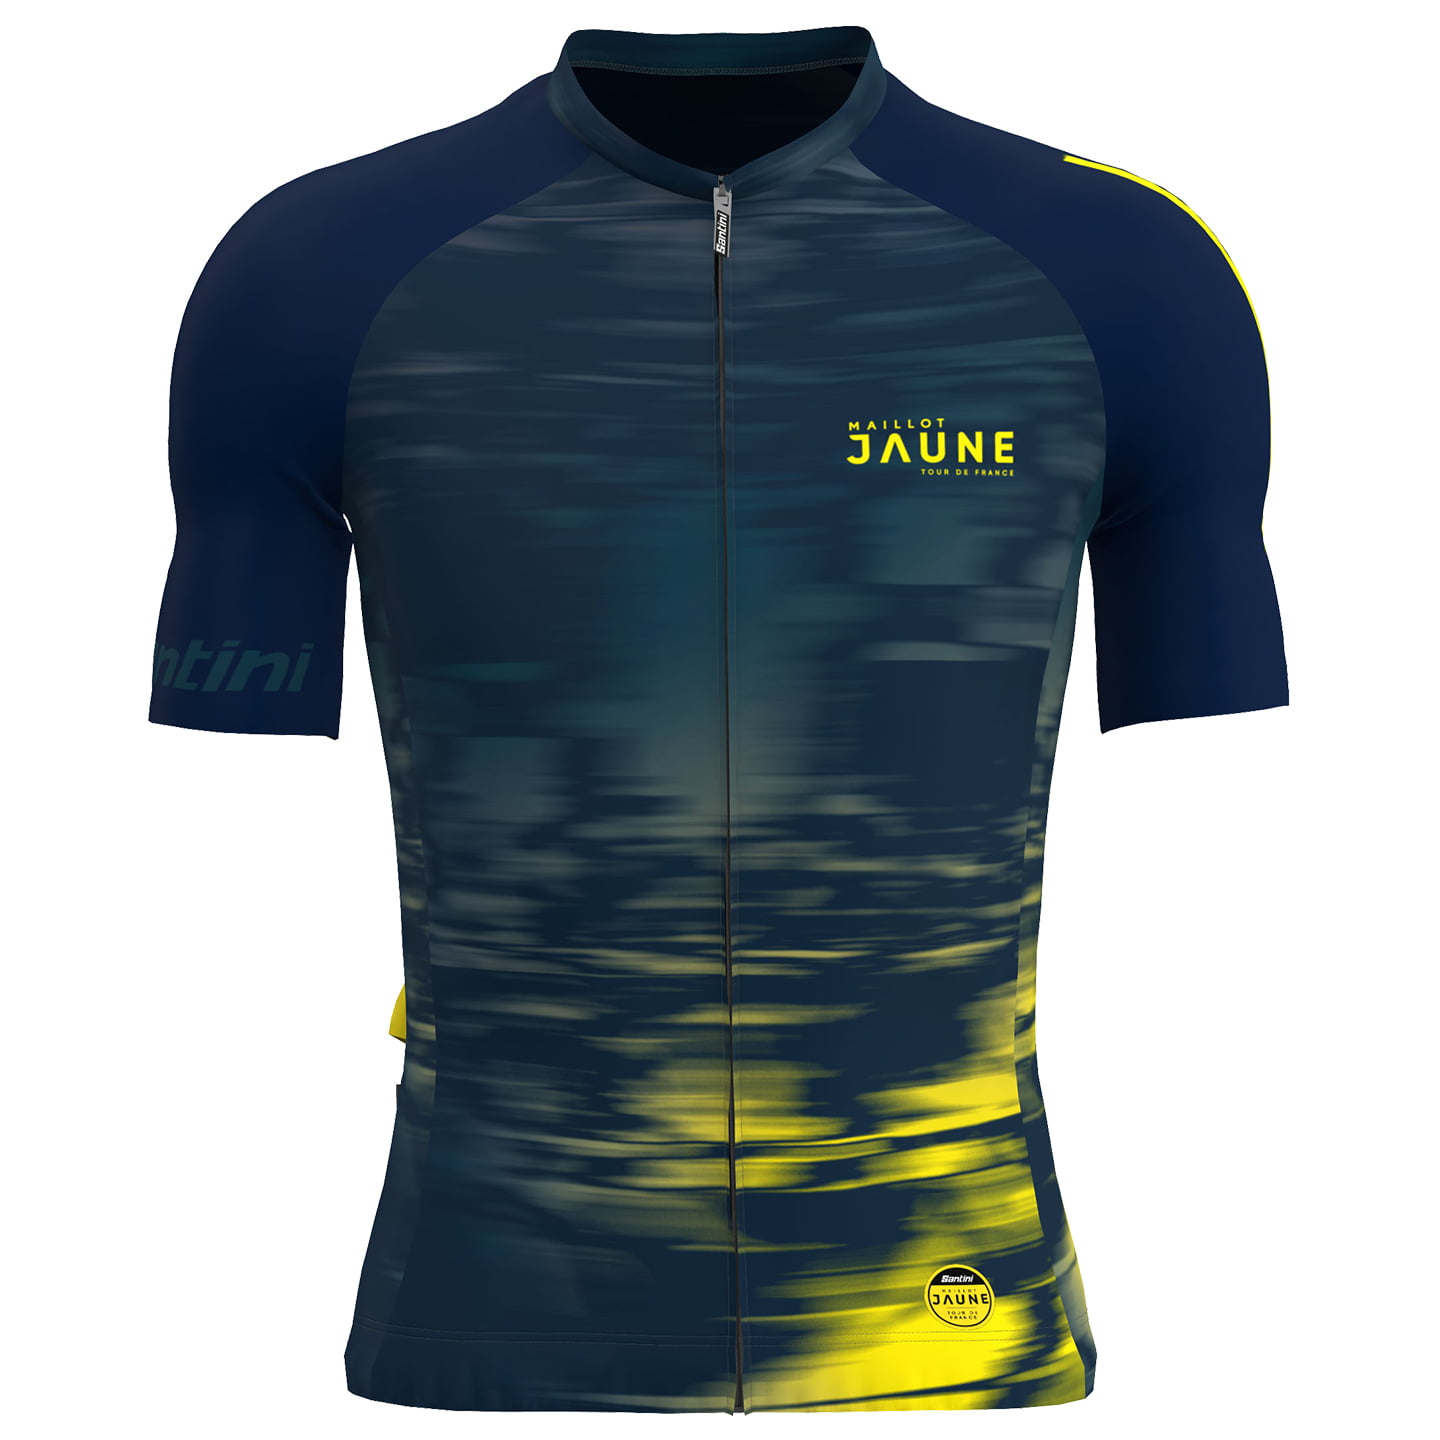 TOUR DE FRANCE Le Maillot Jaune Esprit 2023 Short Sleeve Jersey, for men, size M, Cycle jersey, Cycling clothing